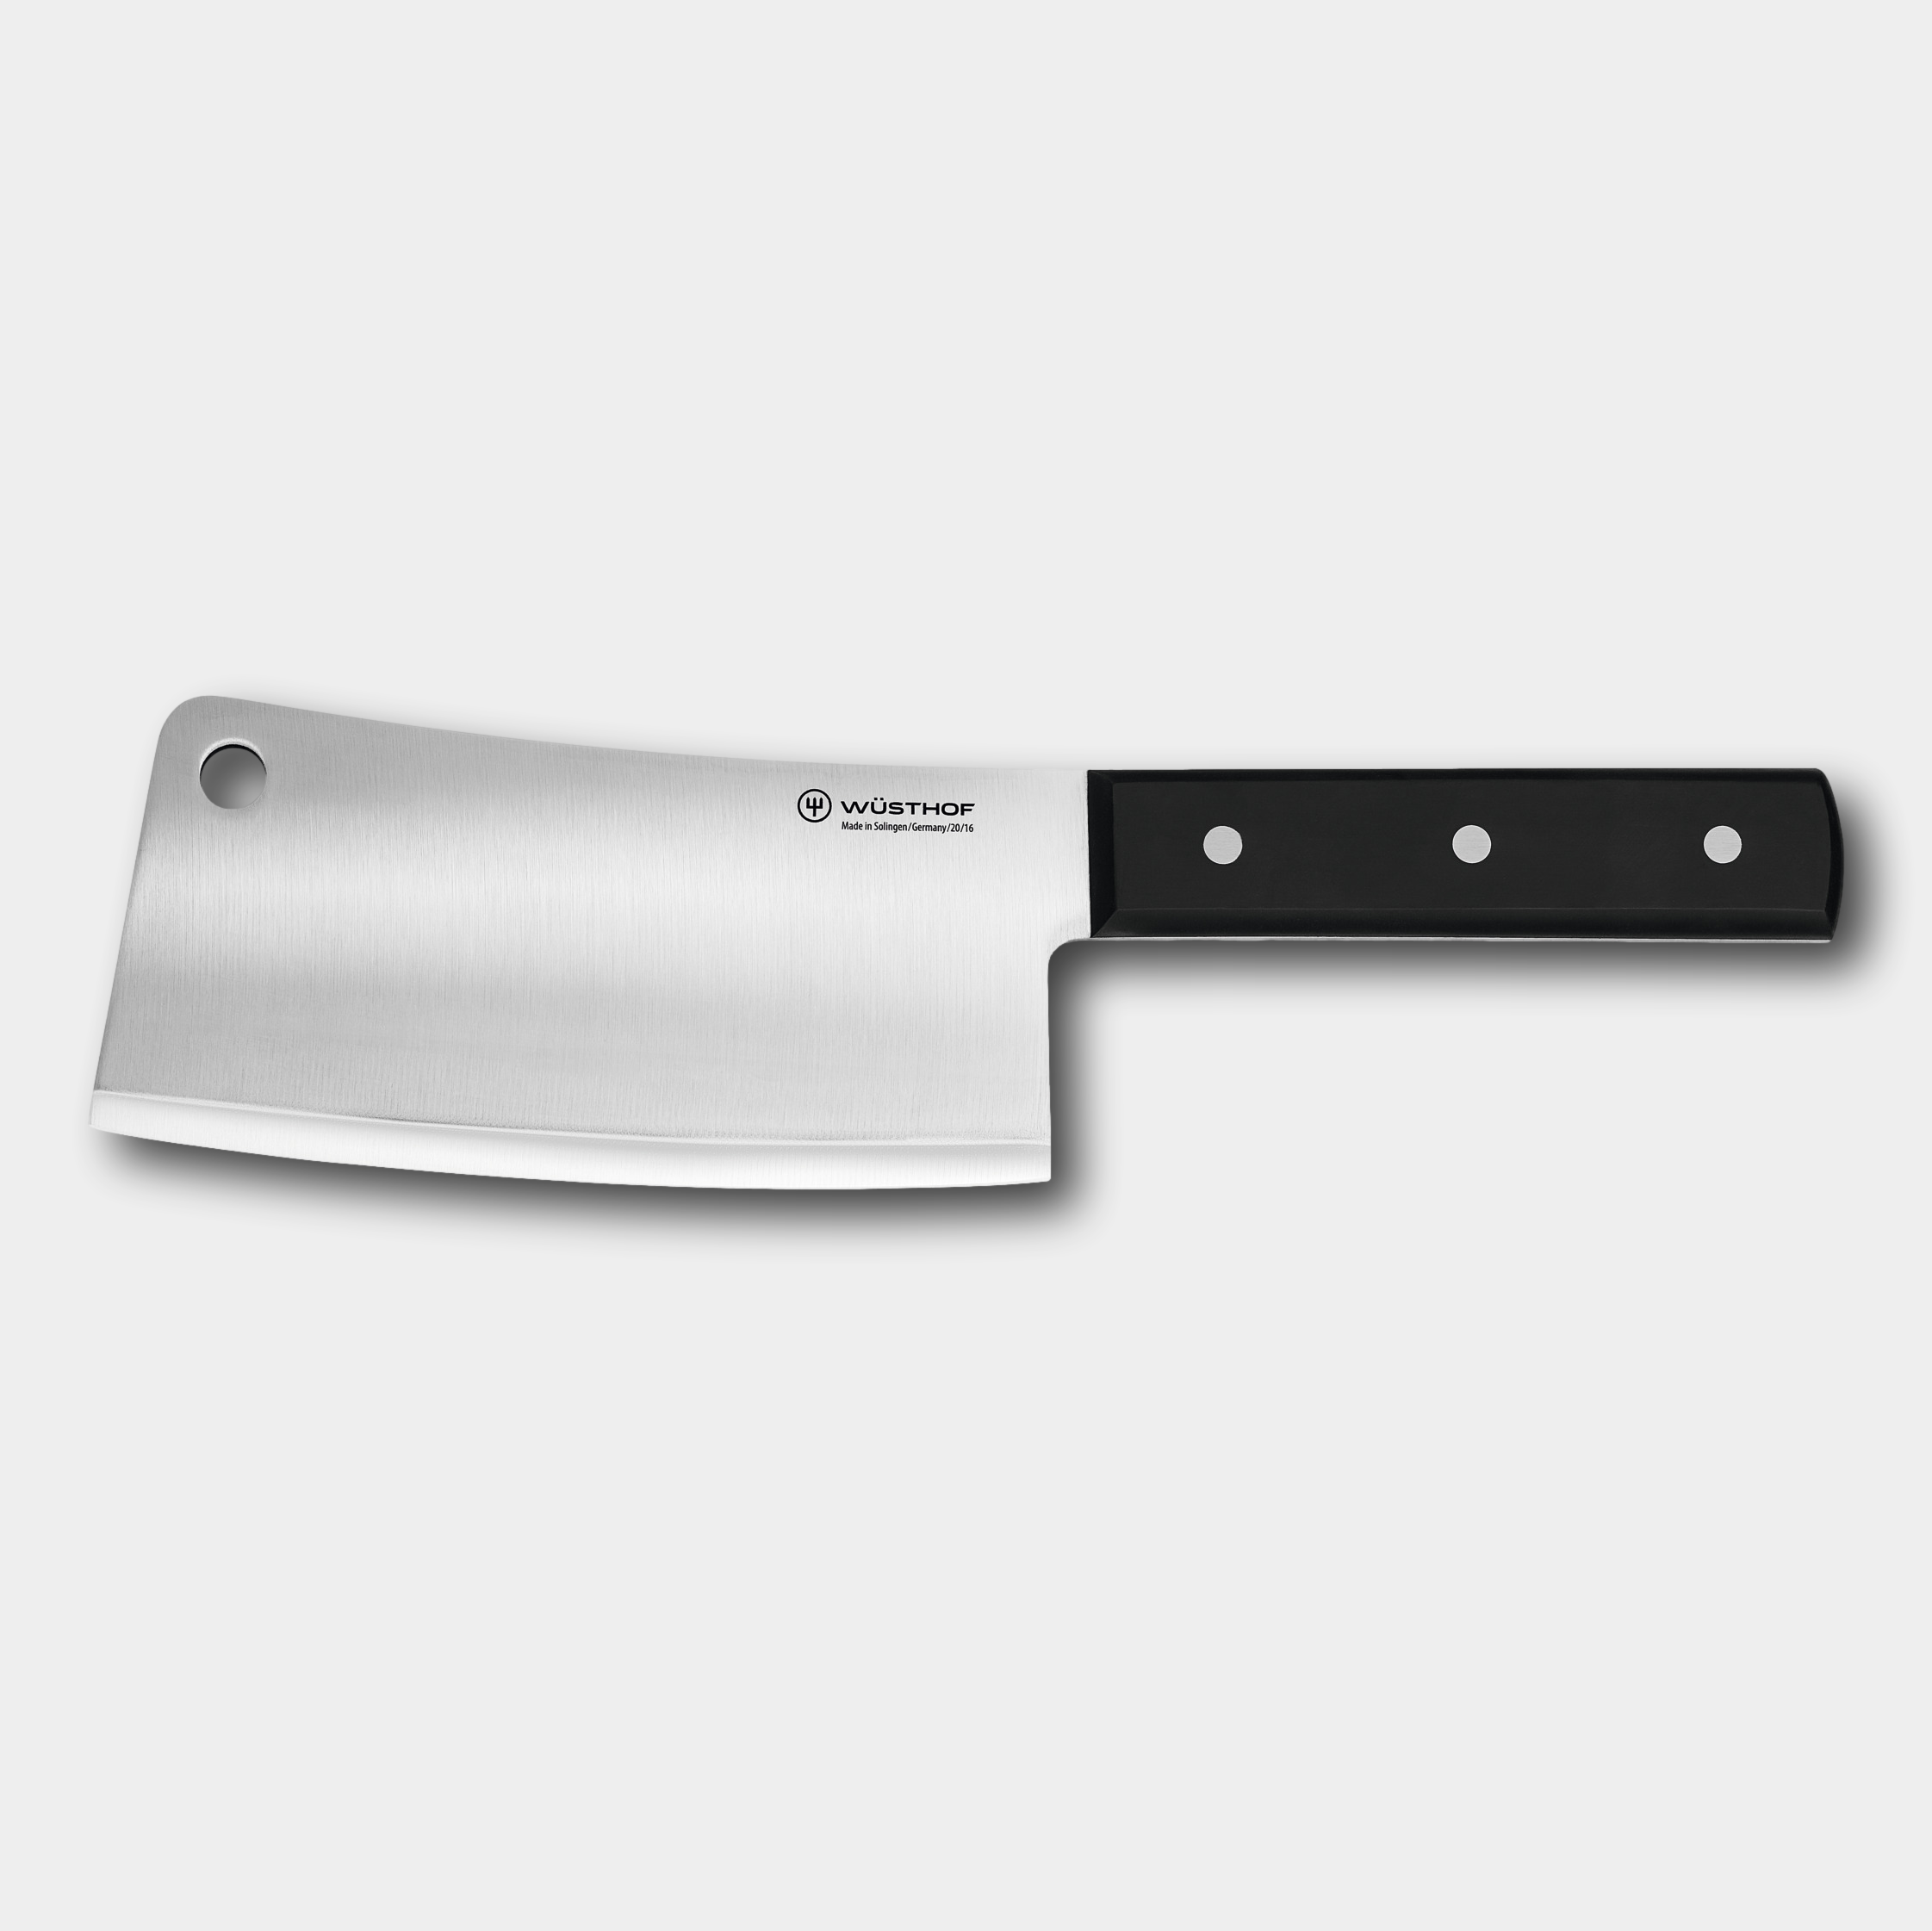 Wusthof 16cm Cleaver Knife SPECIAL OFFER